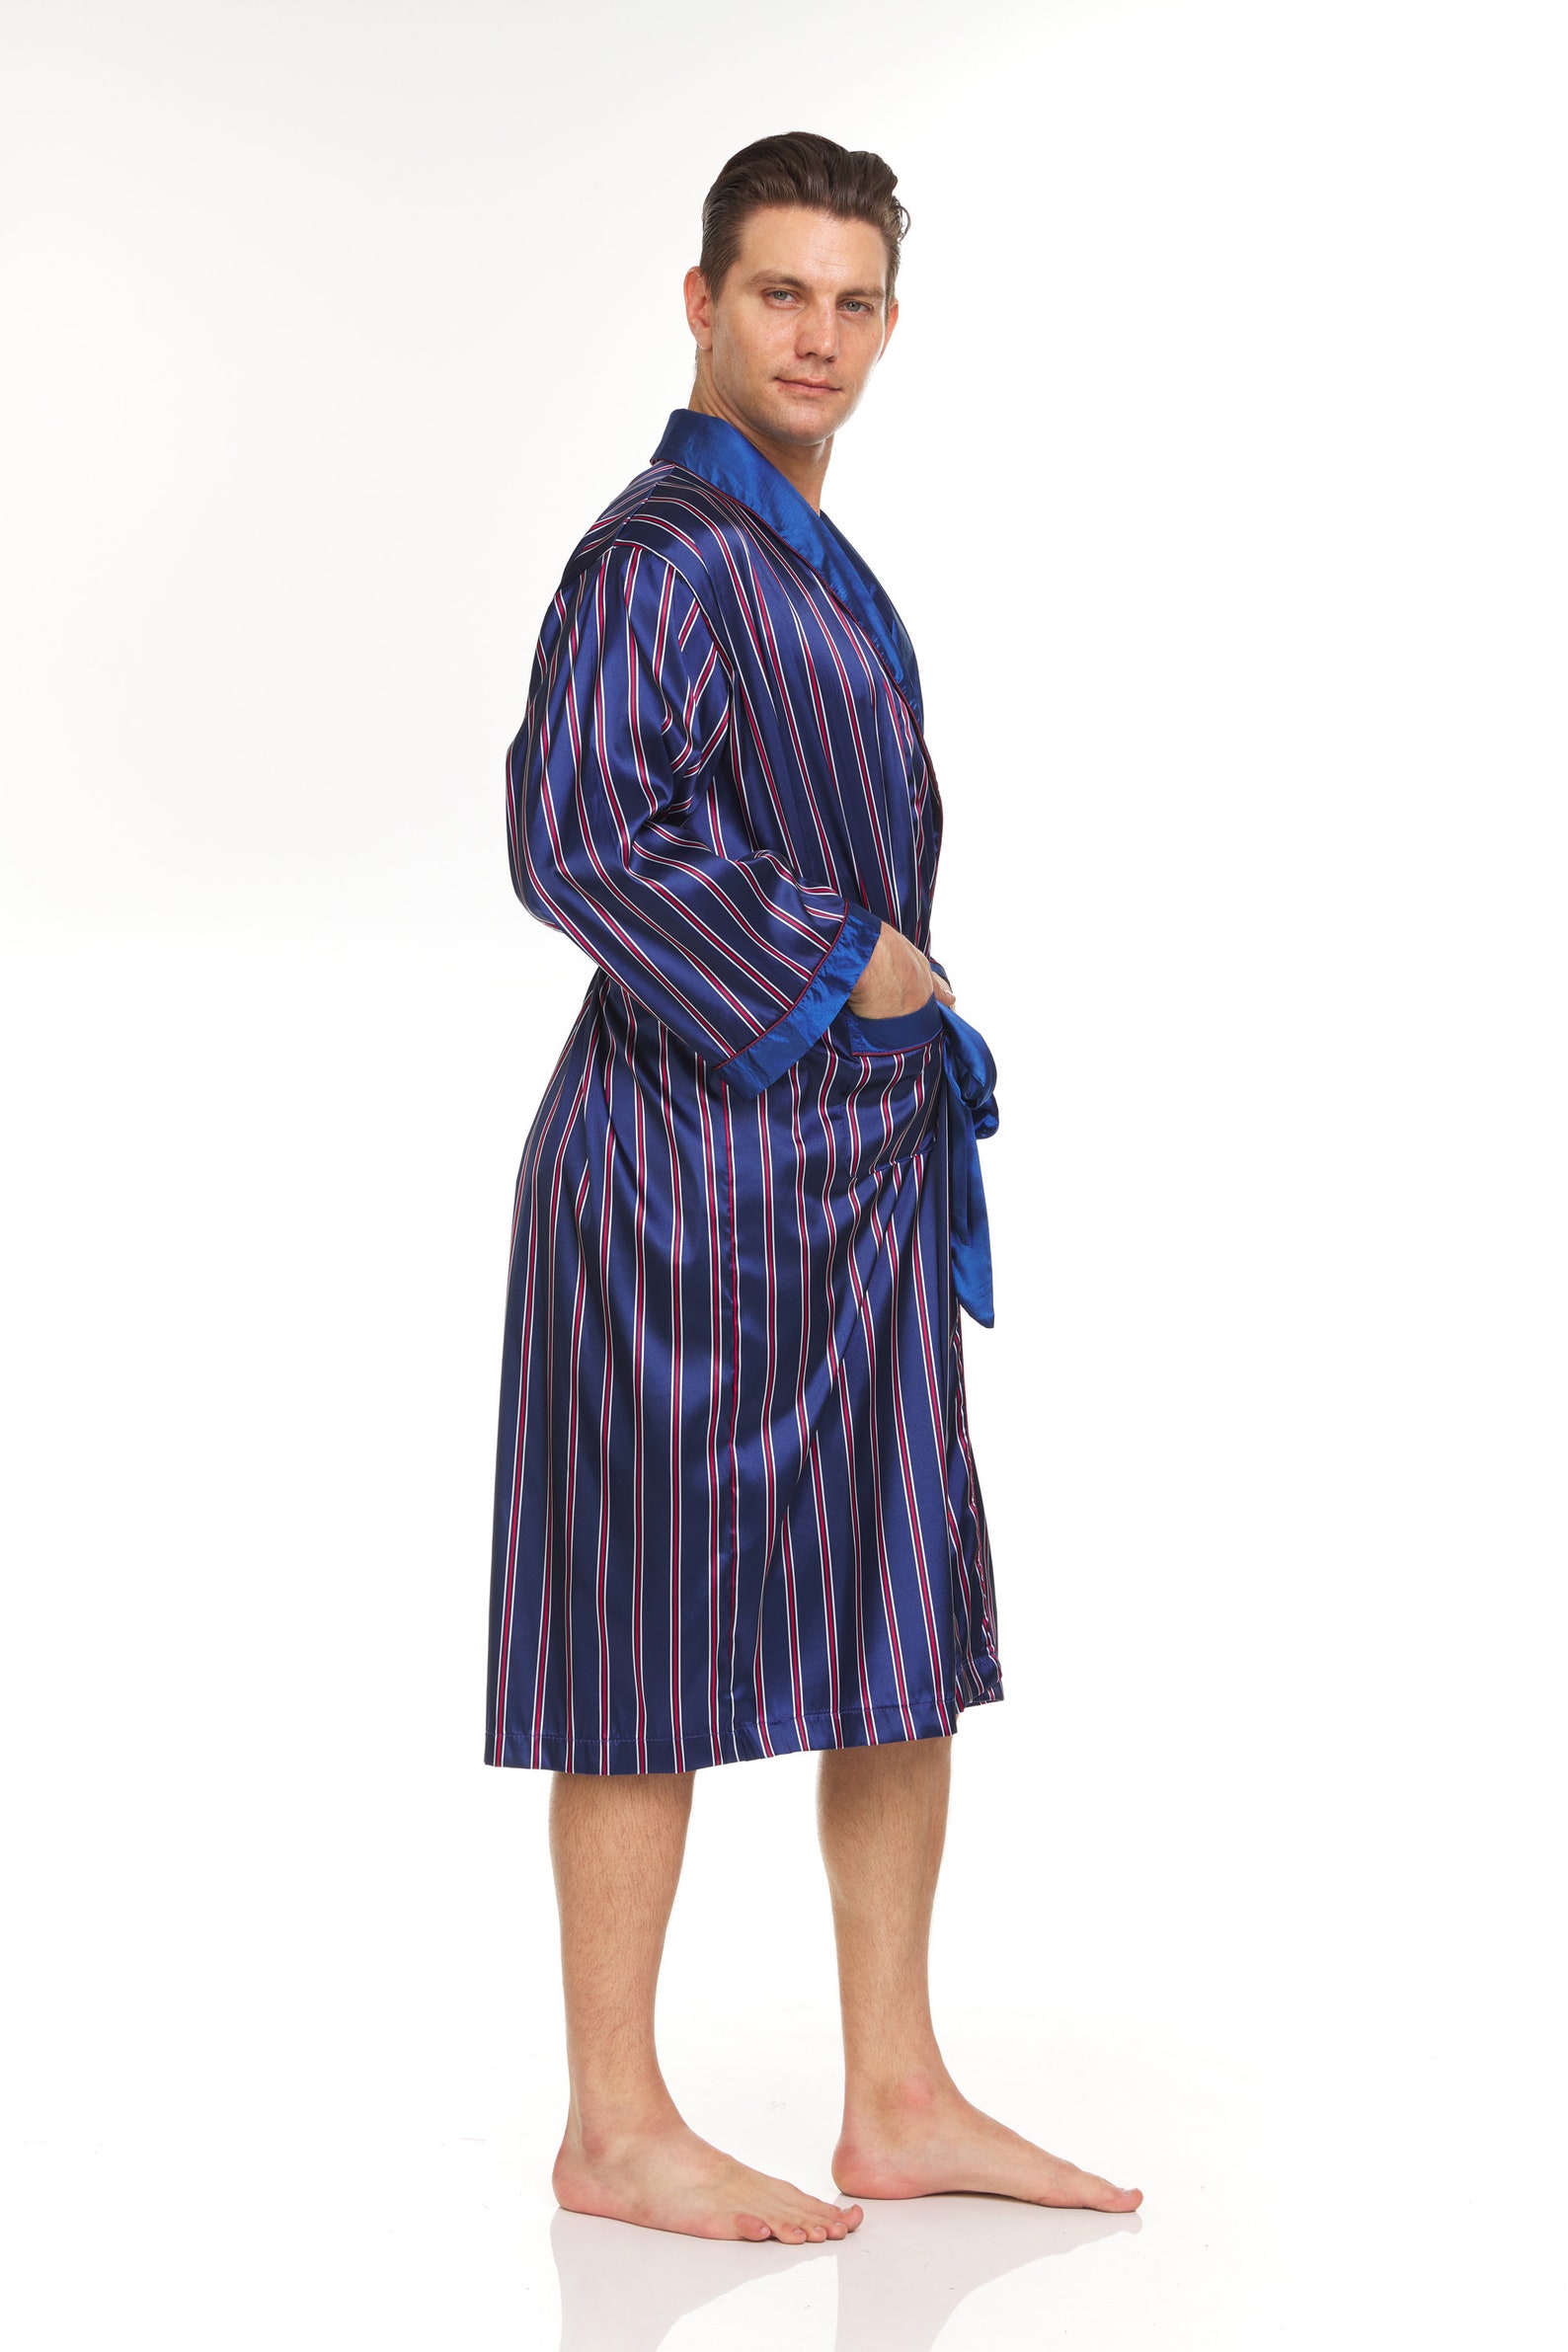 Men's Silk Satin Robe Royal Blue Purple White Stripe - Etsy UK